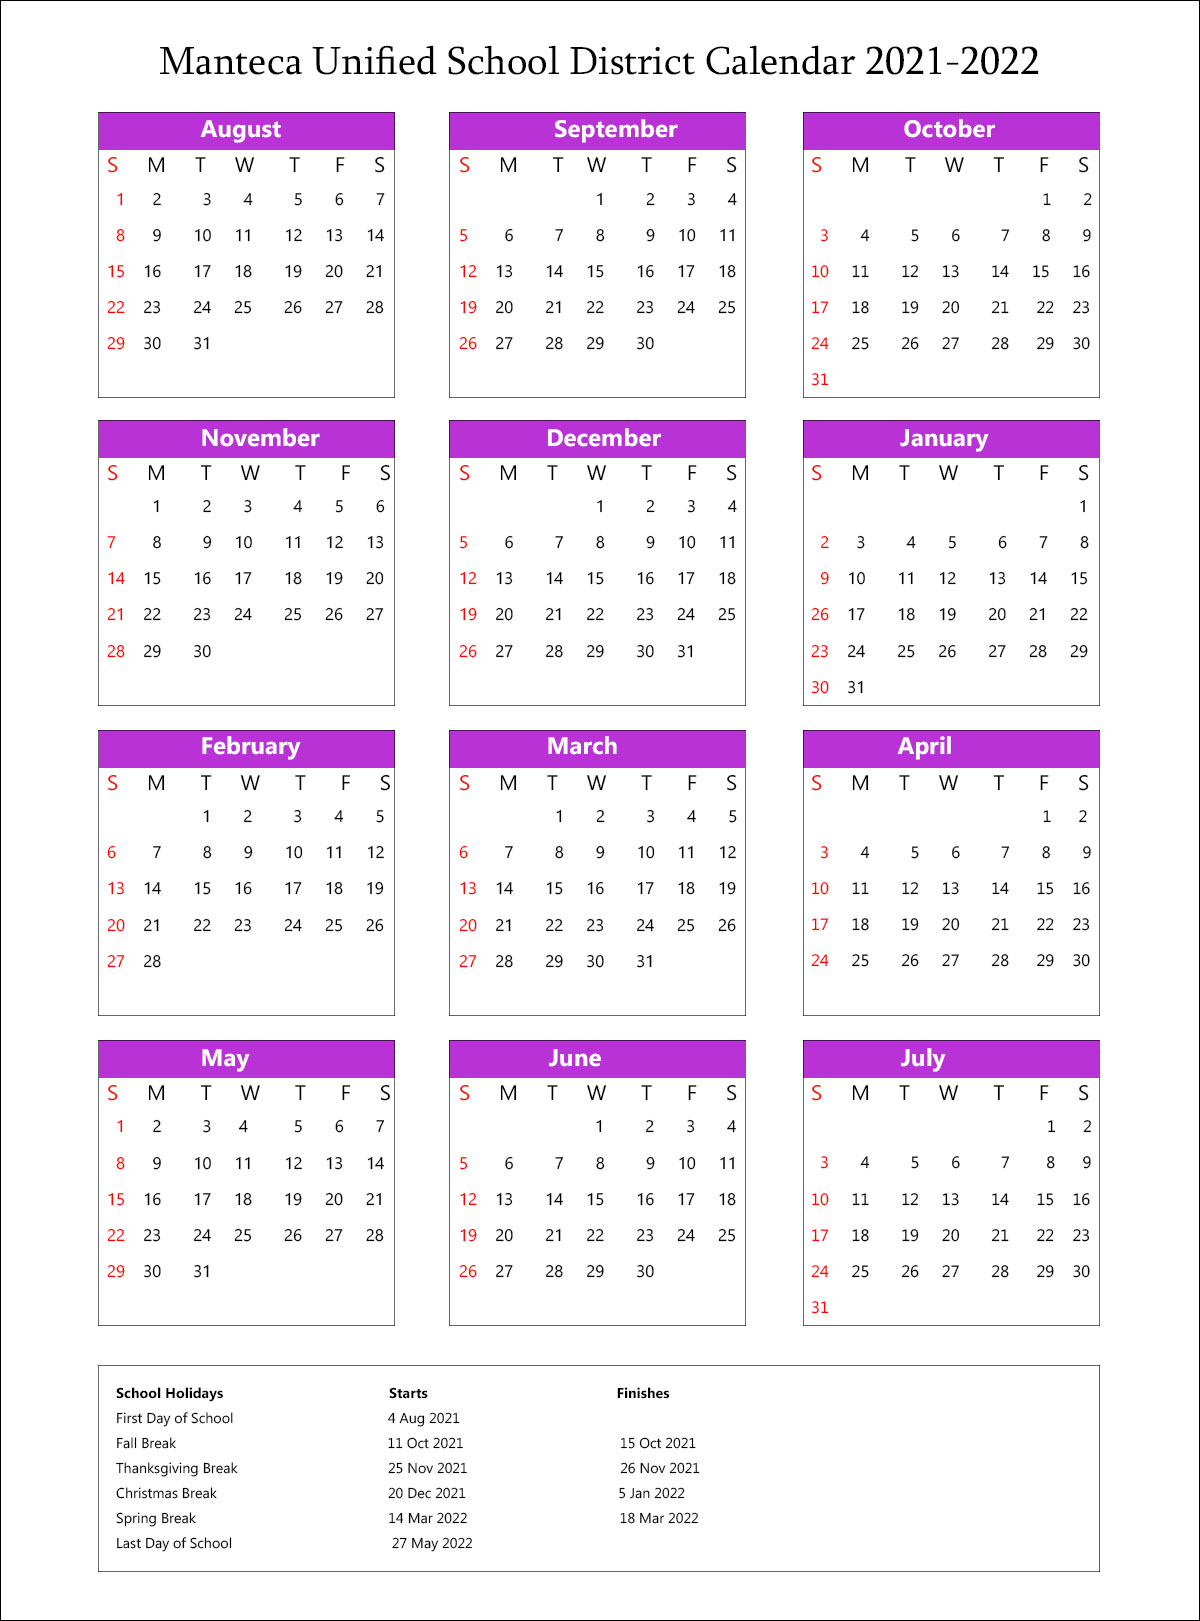 Manteca Unified School District, California Calendar Holidays 2021